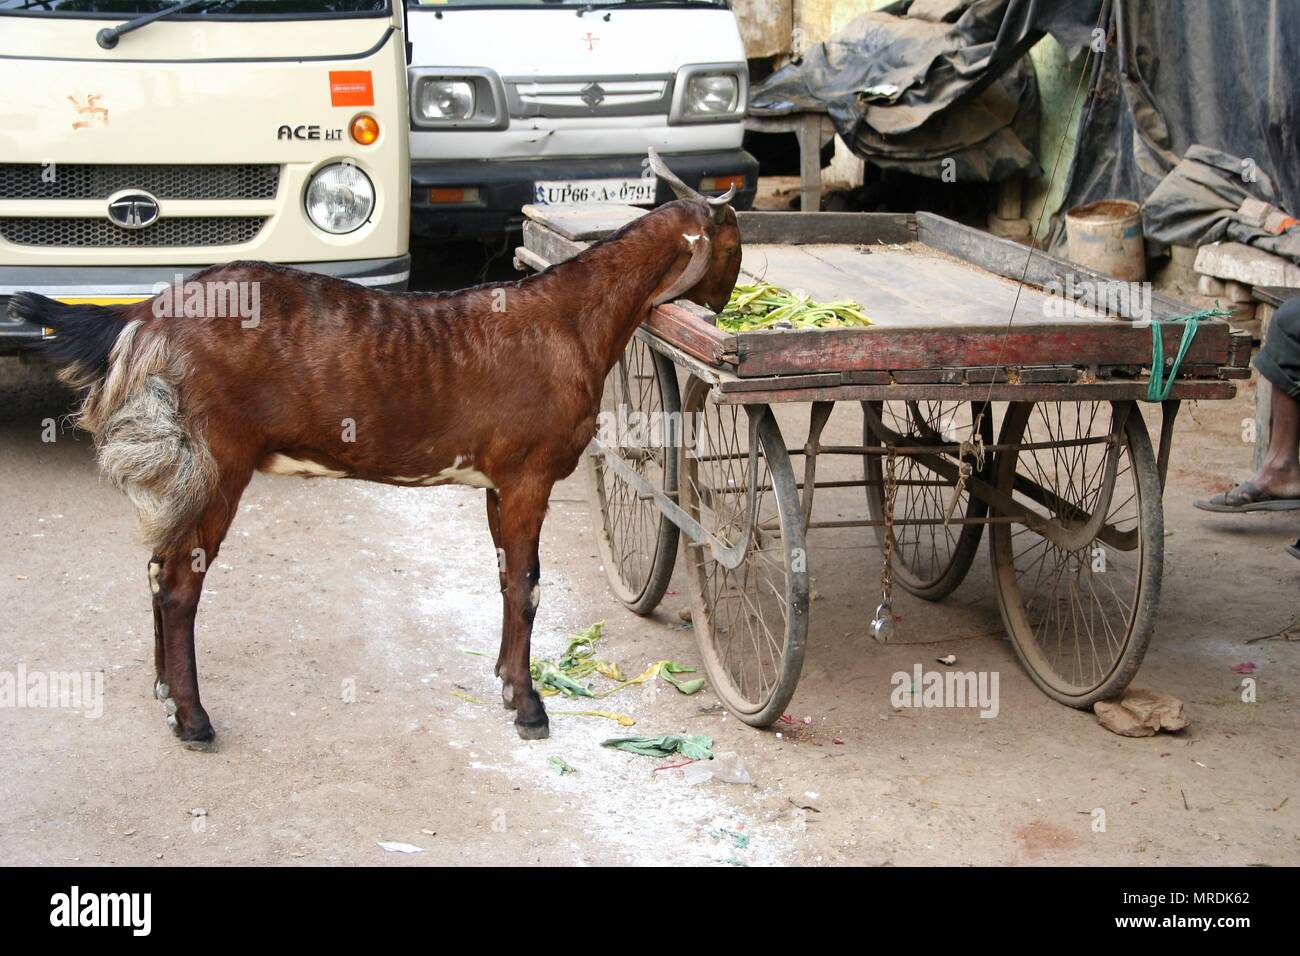 Capra marrone di mangiare le verdure dal carrello, Varanasi, India Foto Stock